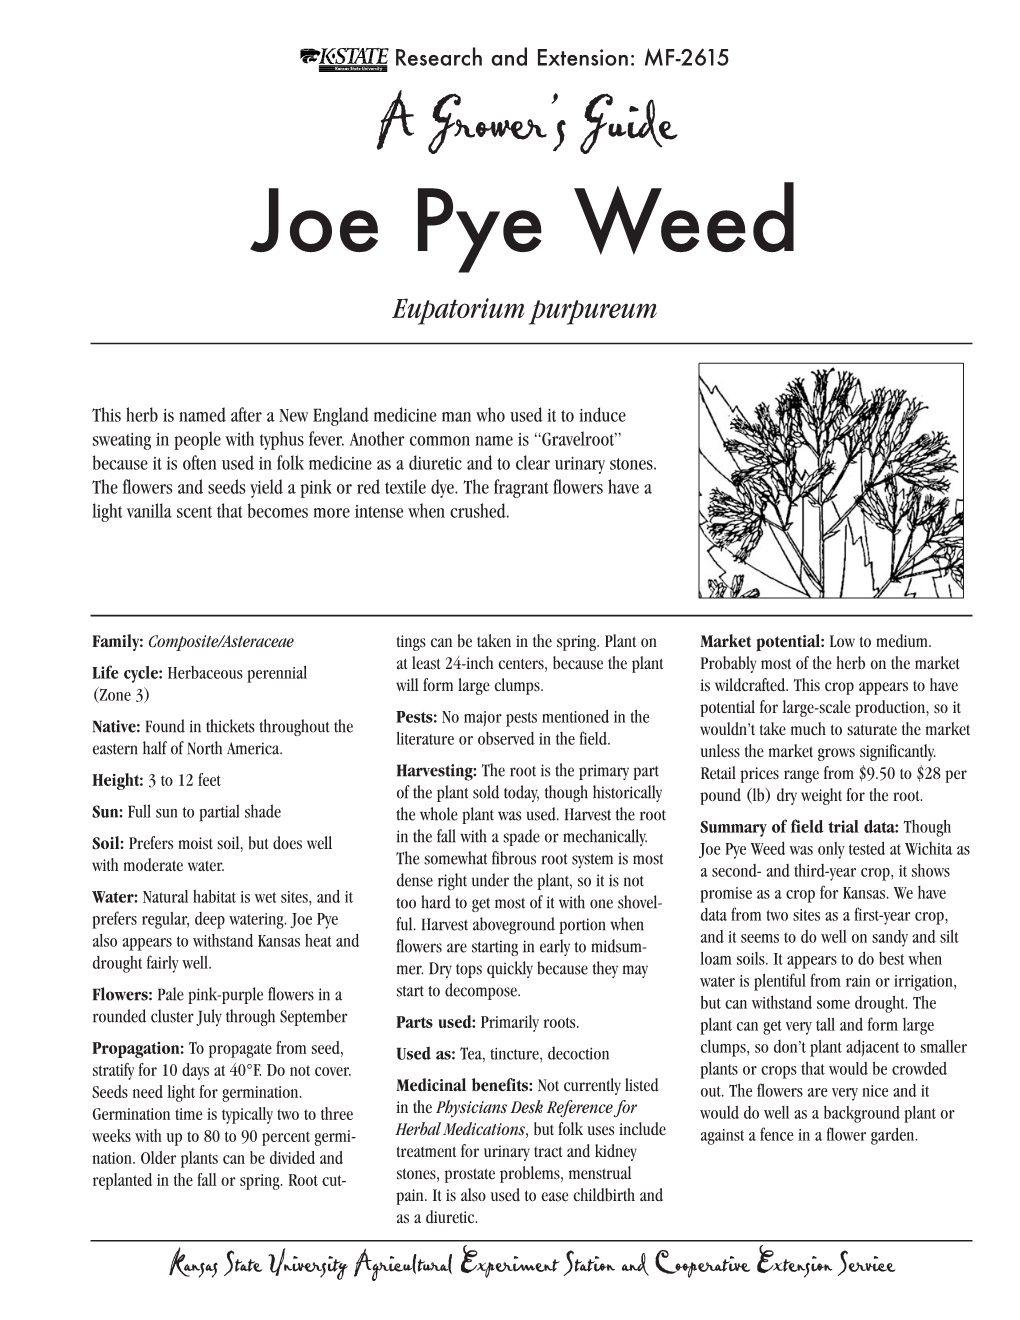 Joe Pye Weed Eupatorium Purpureum